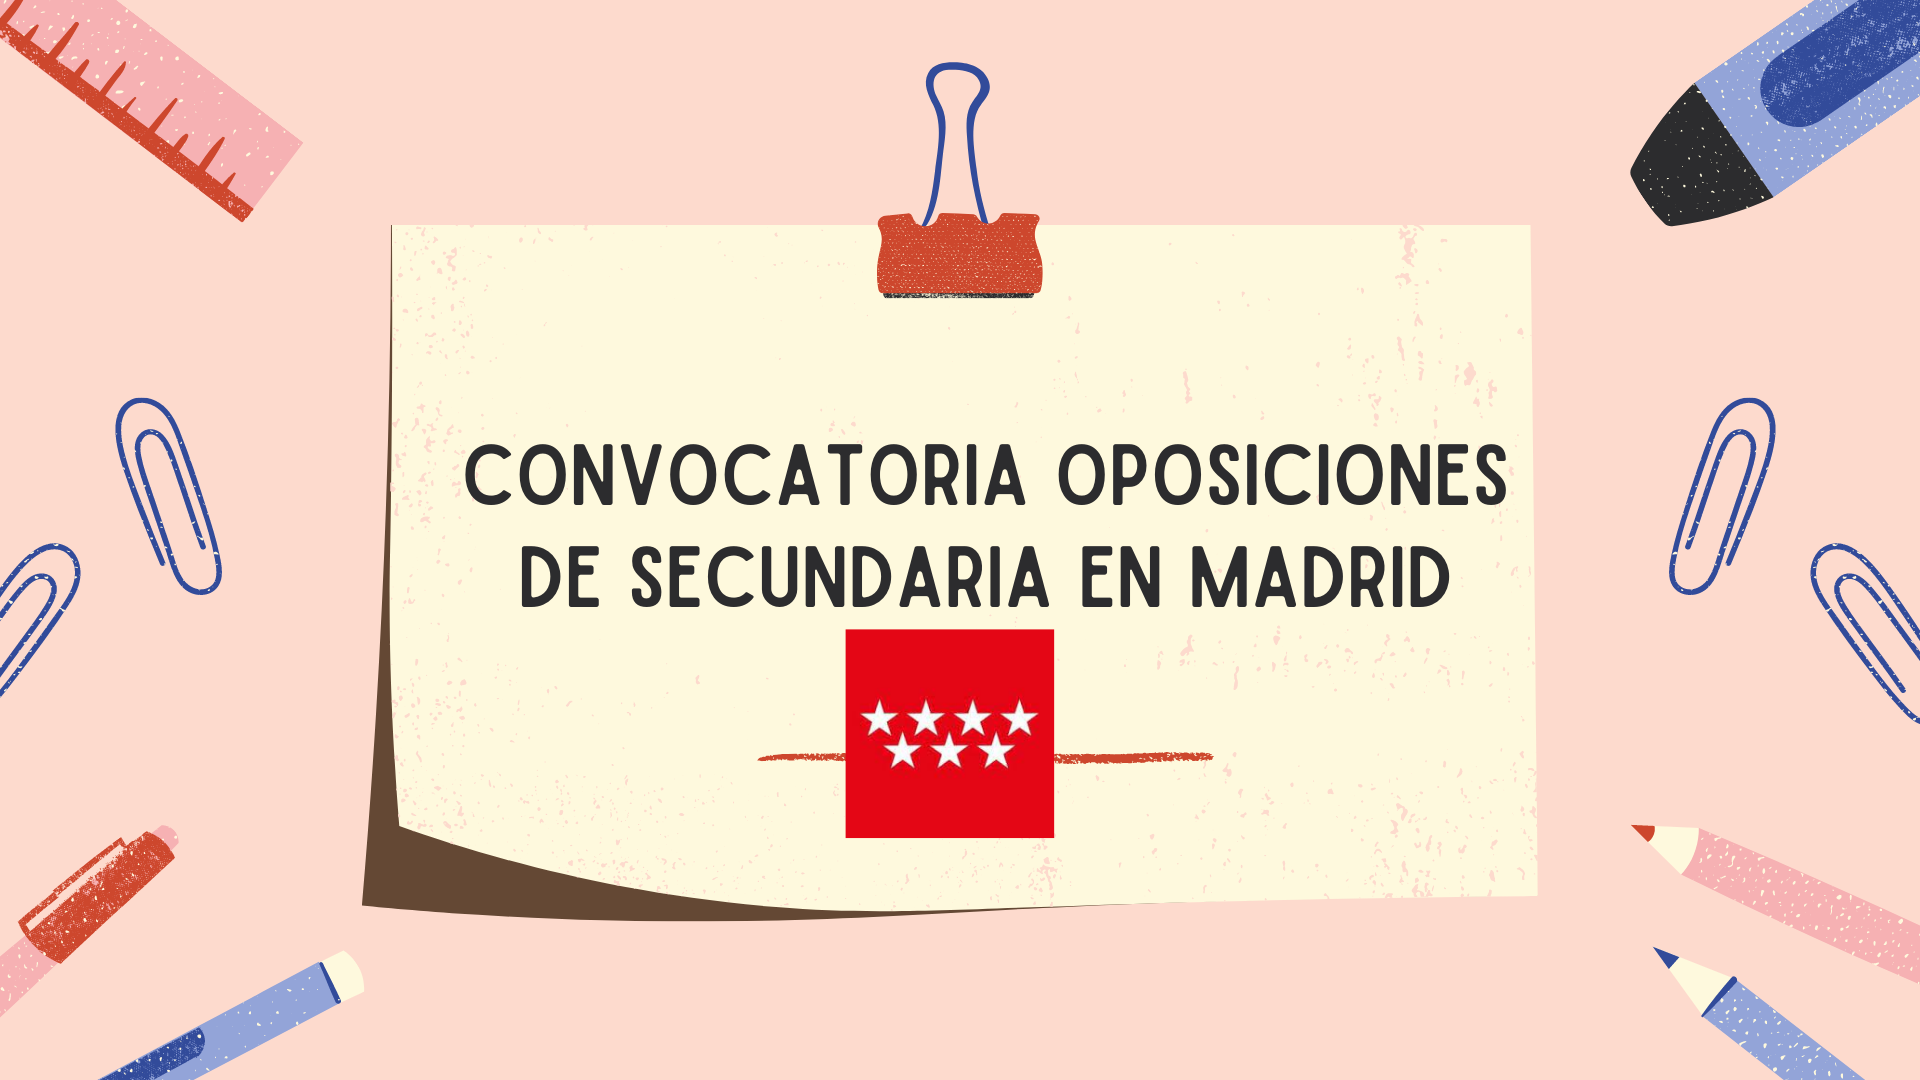 Convocatoria de oposiciones de secundaria en Madrid